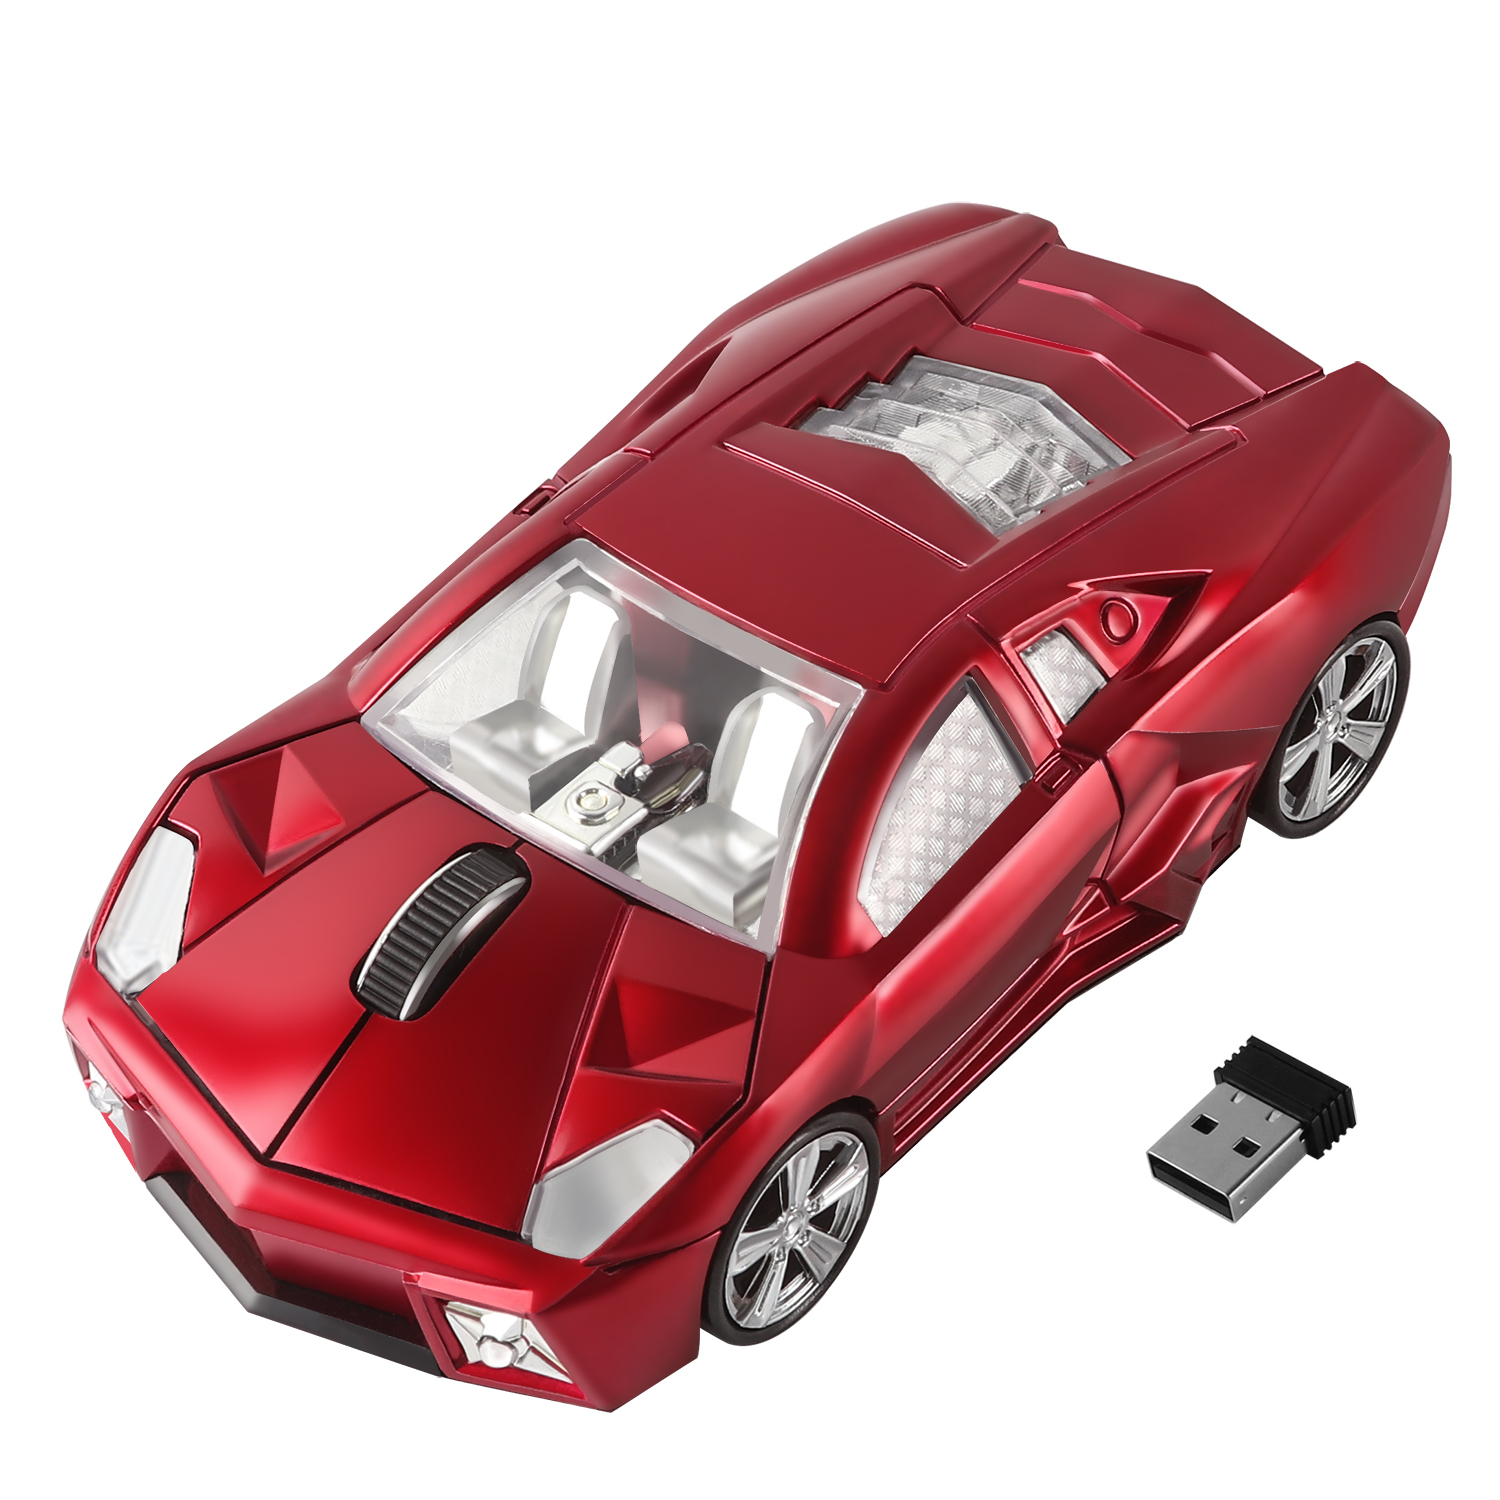 I-2-4G-Wireless-Mouse-Ergonomic-Sports-Car-Design-Gaming-Mause-1600-DPI-USB-Optical-Kids-Gift (11)